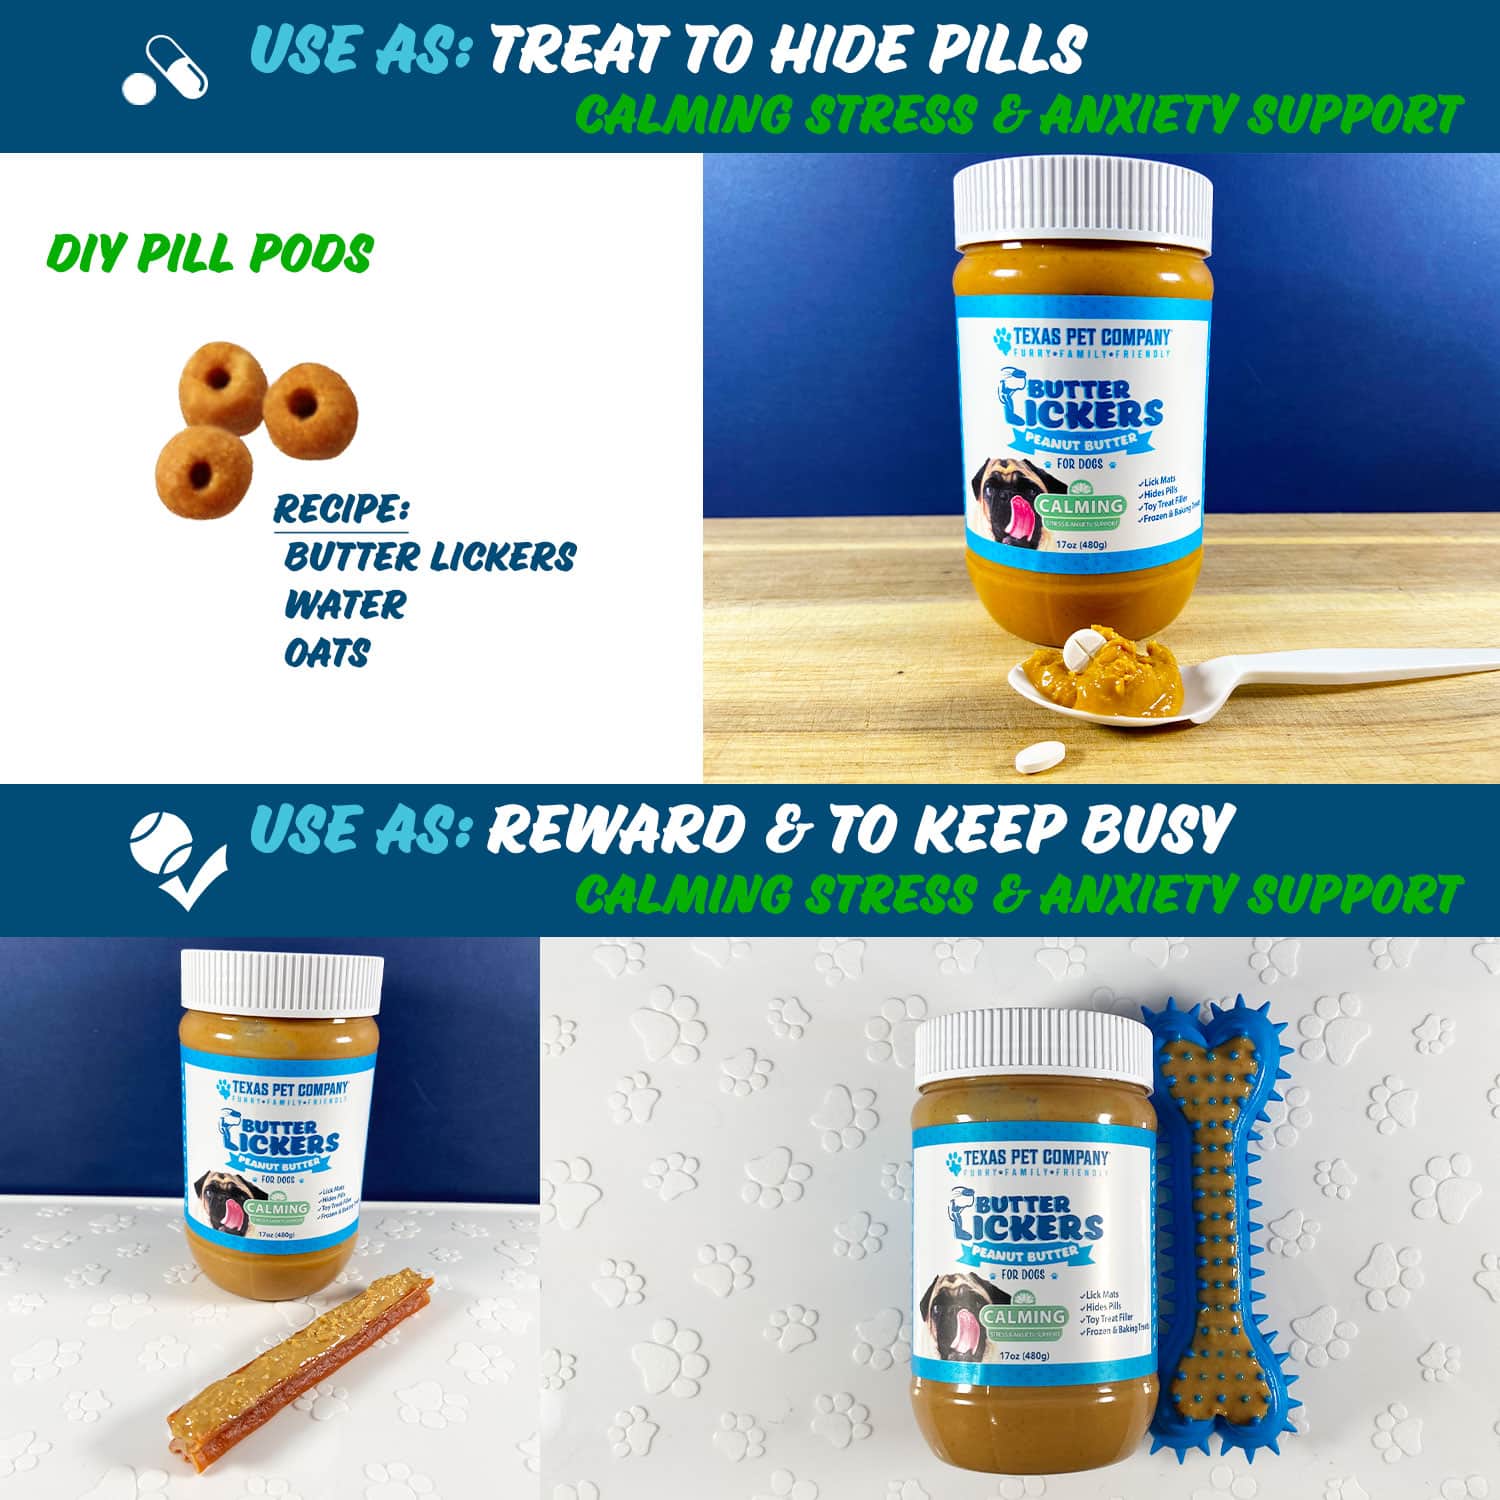 Calming Peanut Butter For Dogs - Dog Safe Peanut Butter